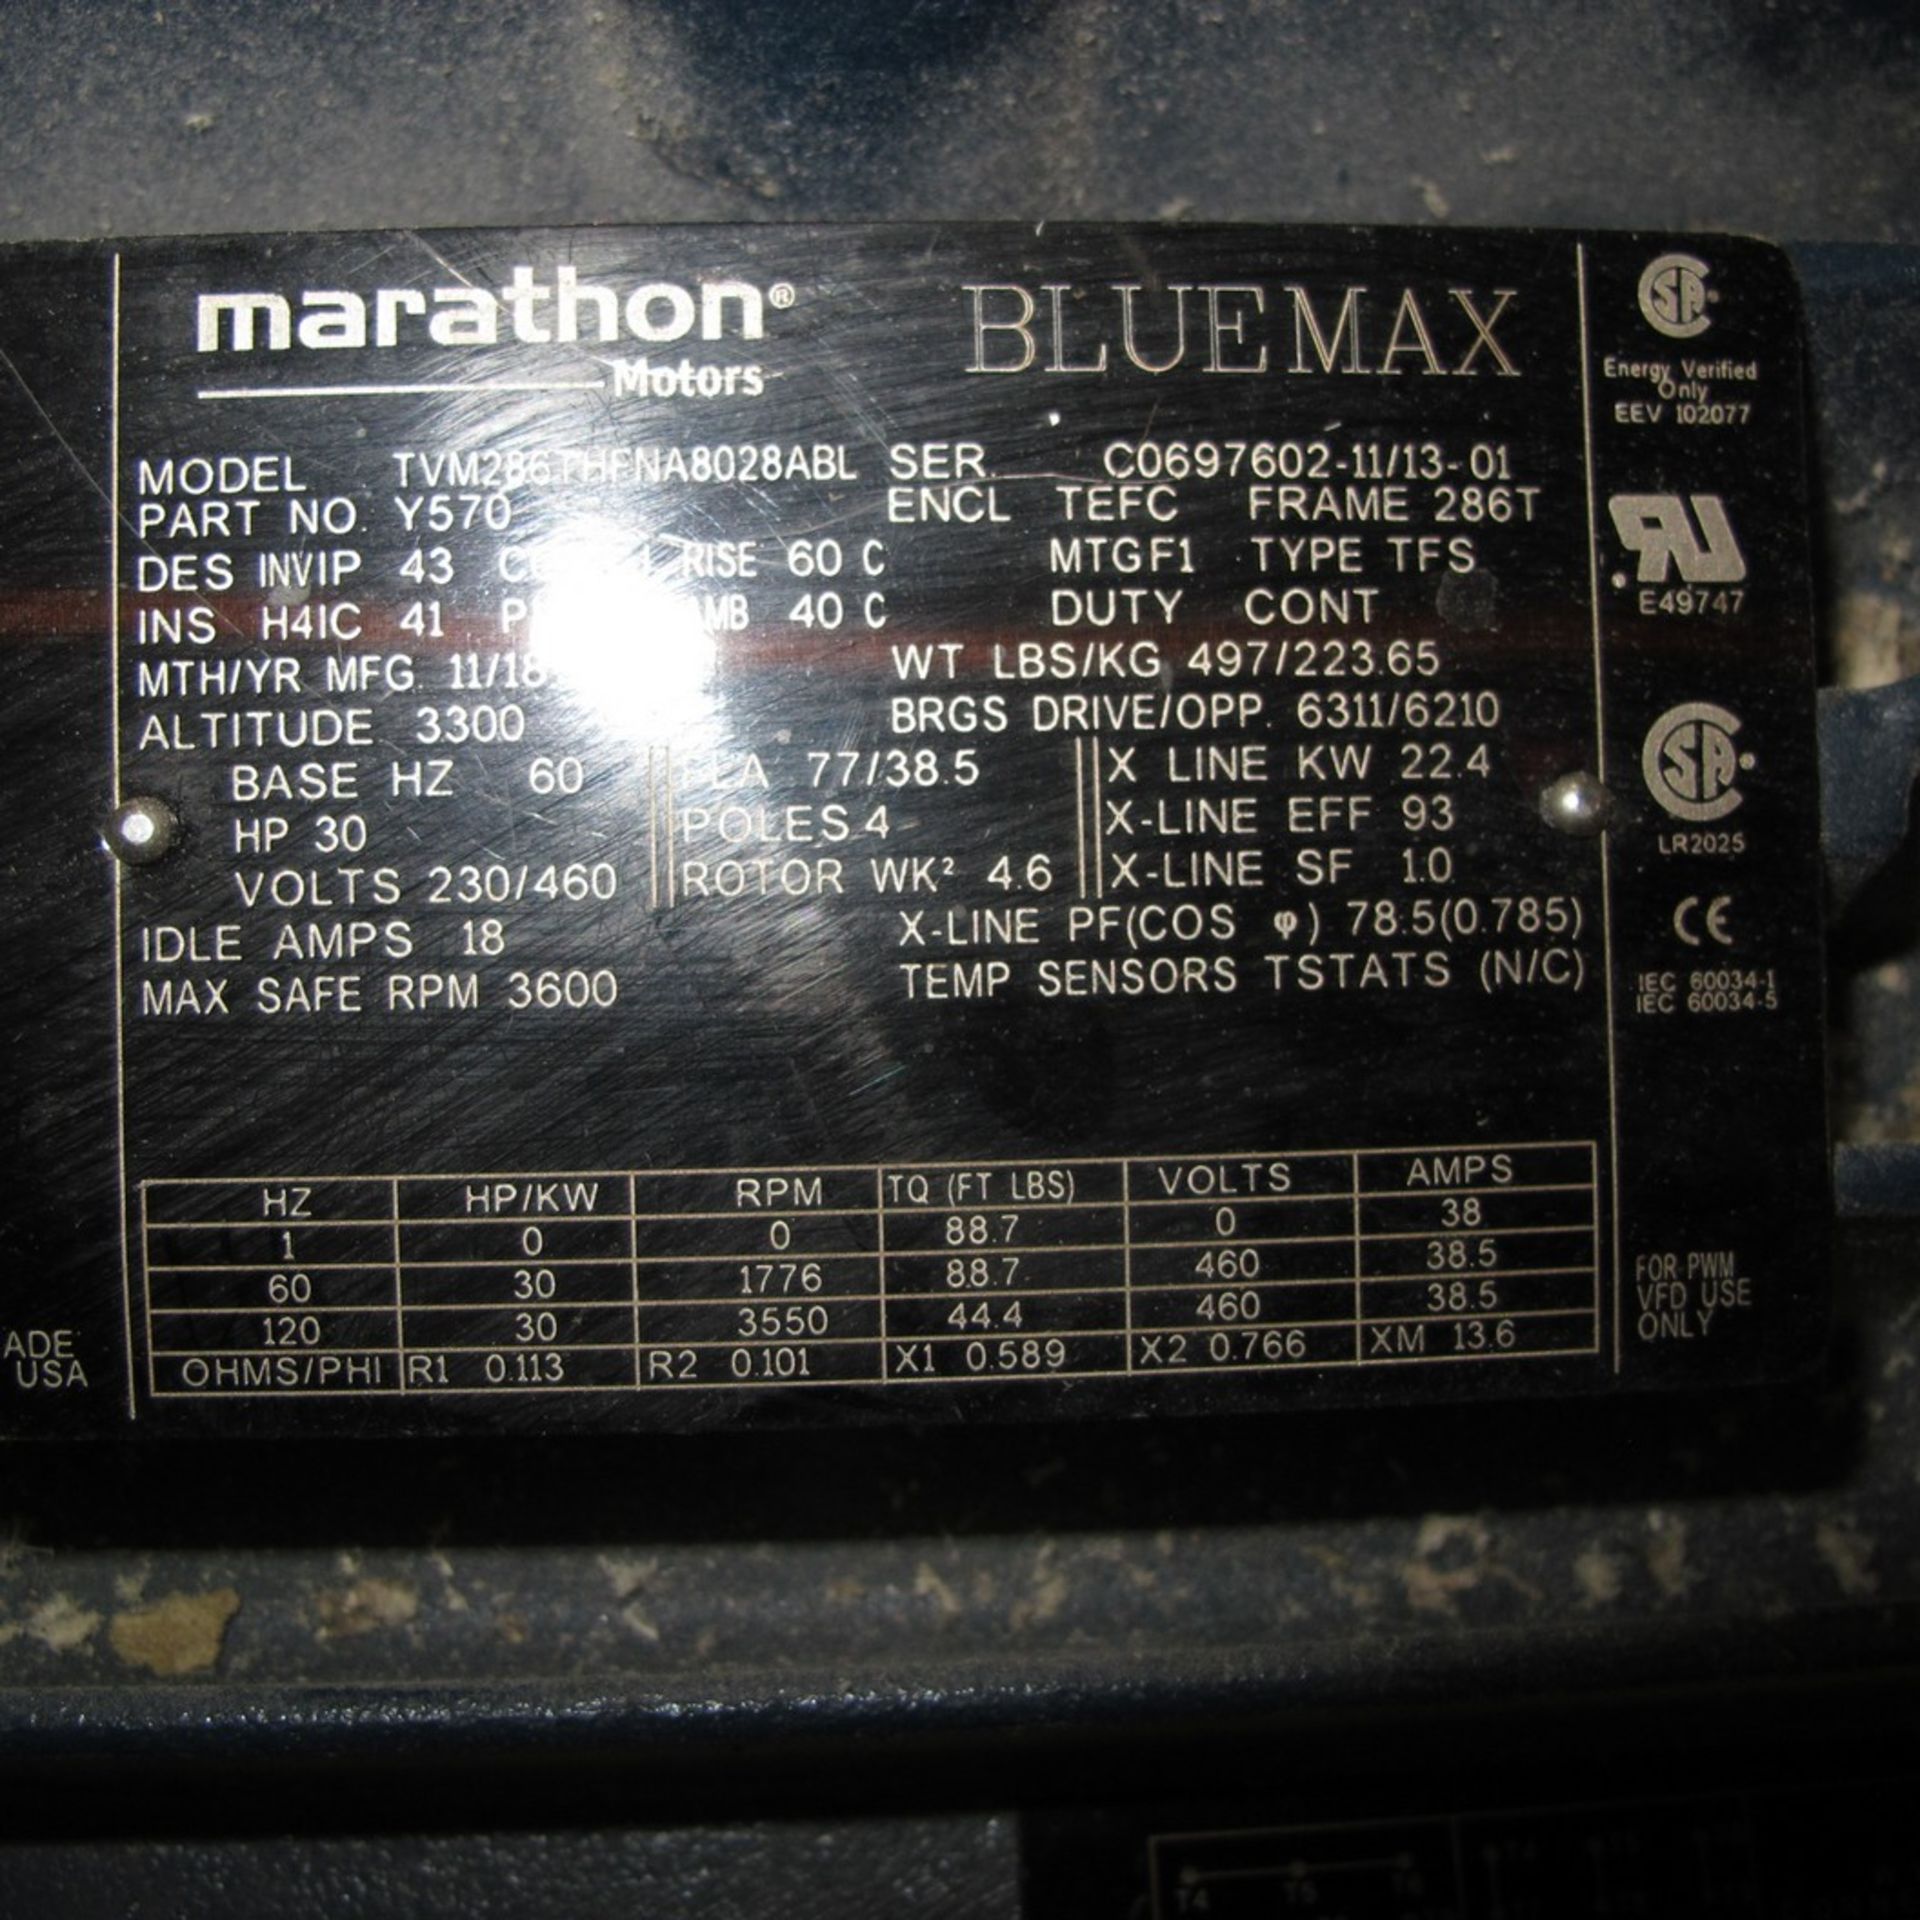 MARATHON BLUE MAX 30HP, 230/460V, 3,600 RPM, 286T FRAME (WEST CENTER PLANT) - Image 2 of 2